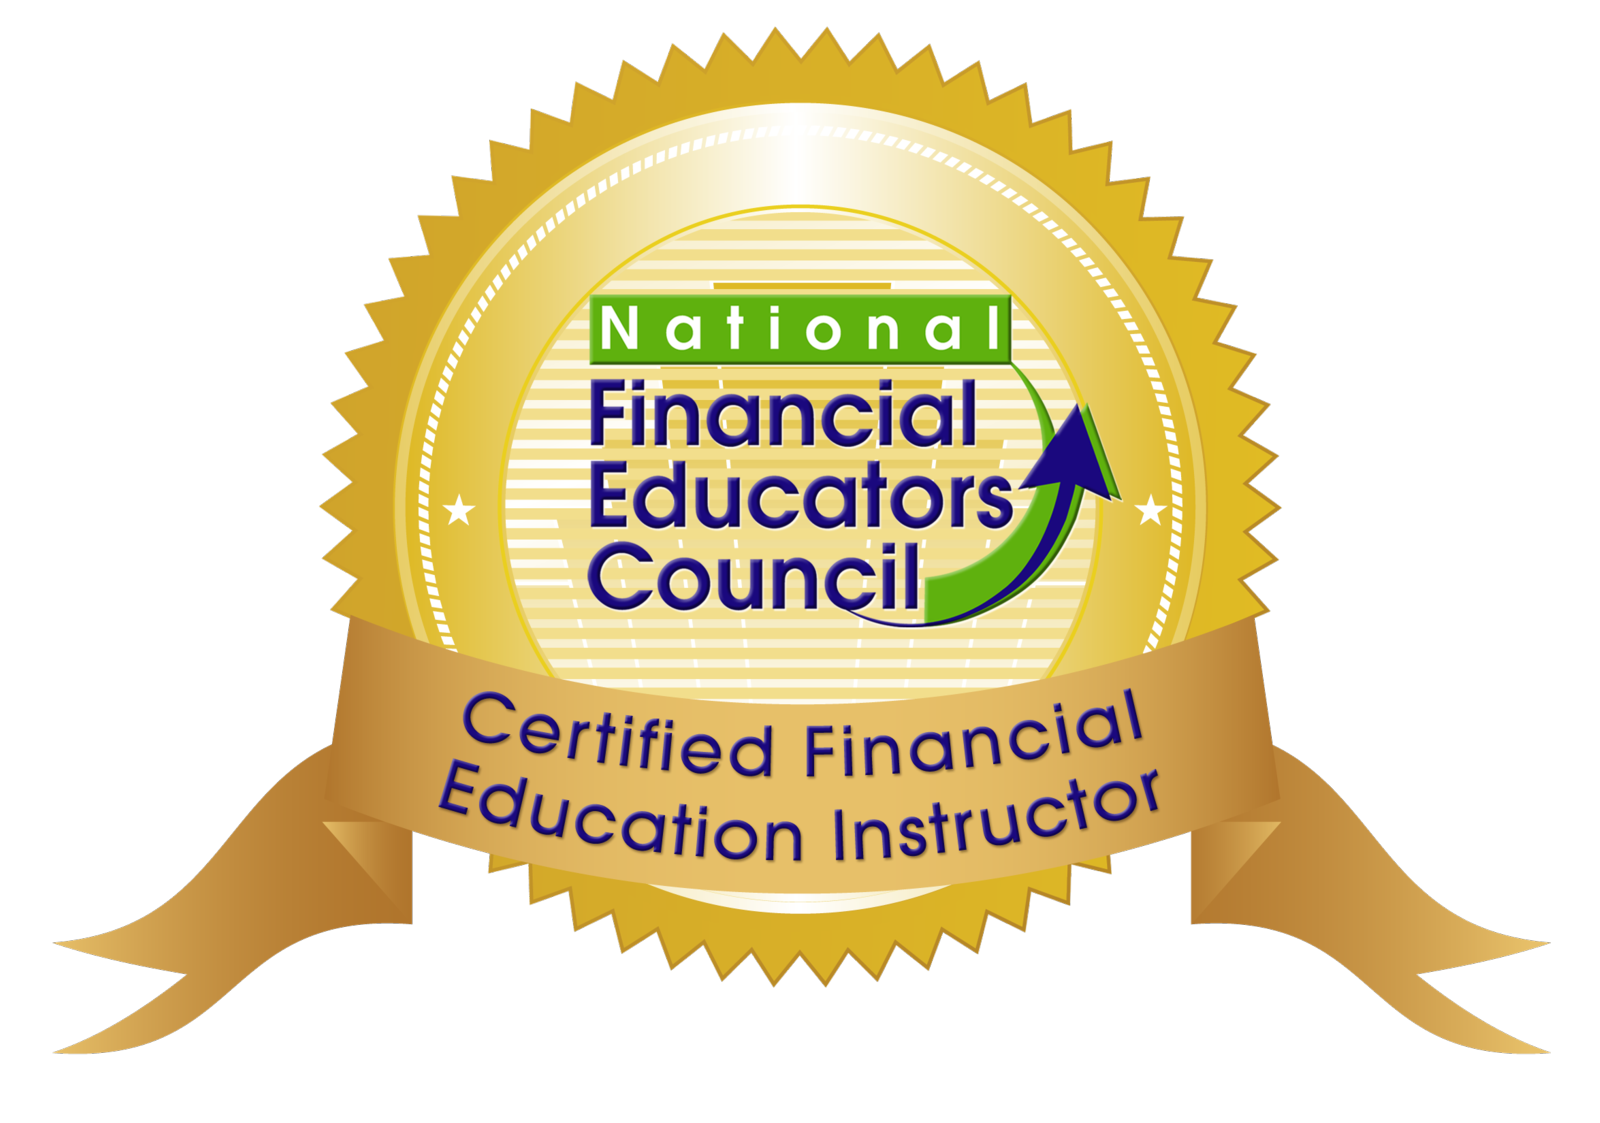 National Financial Educators Council Certified Financial Education Instructor